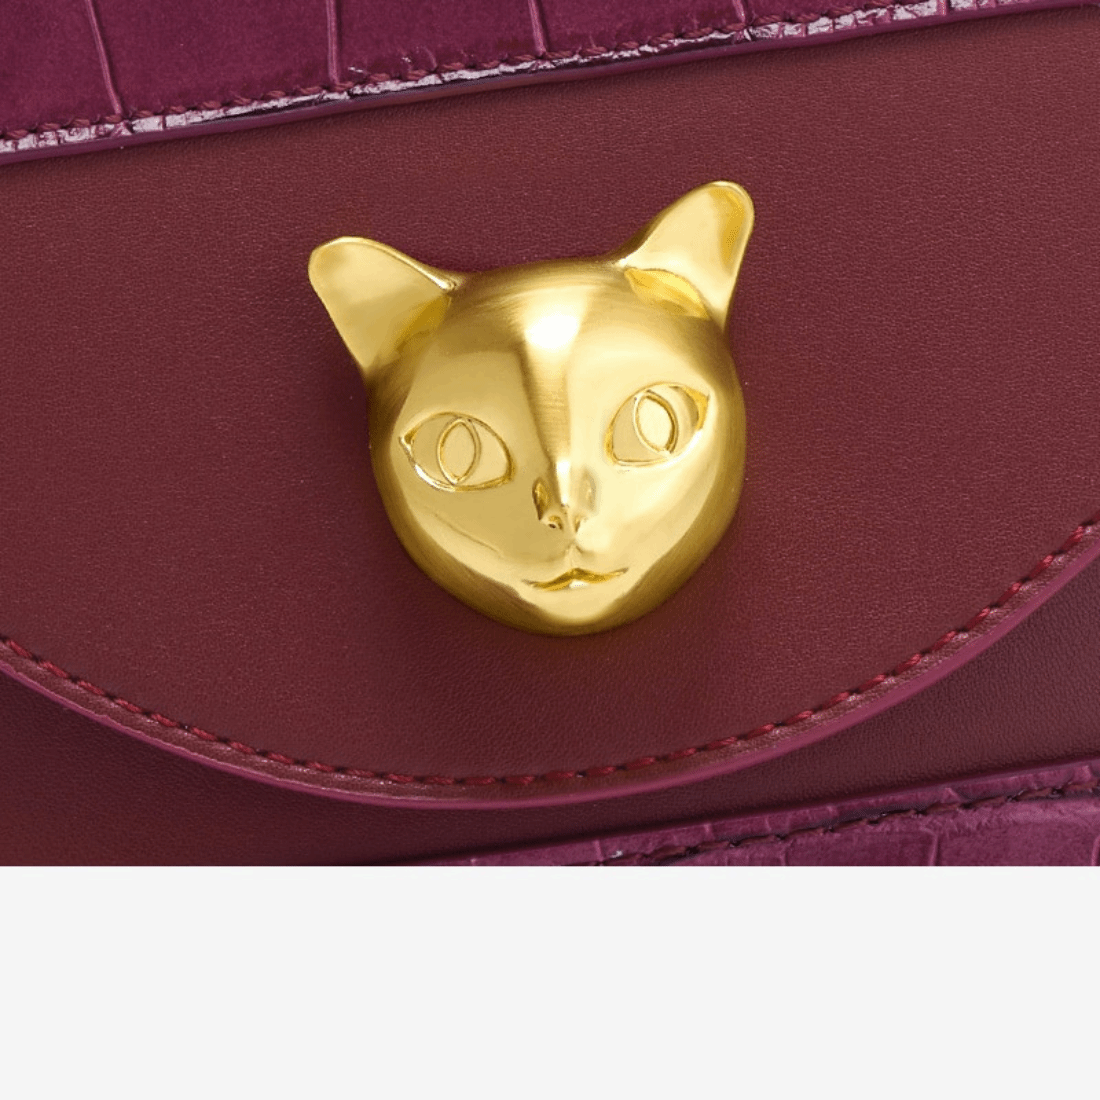 Genuine Leather Luxury Golden Charm Cat Handbag for cat lover premium real leather golden charm handbag